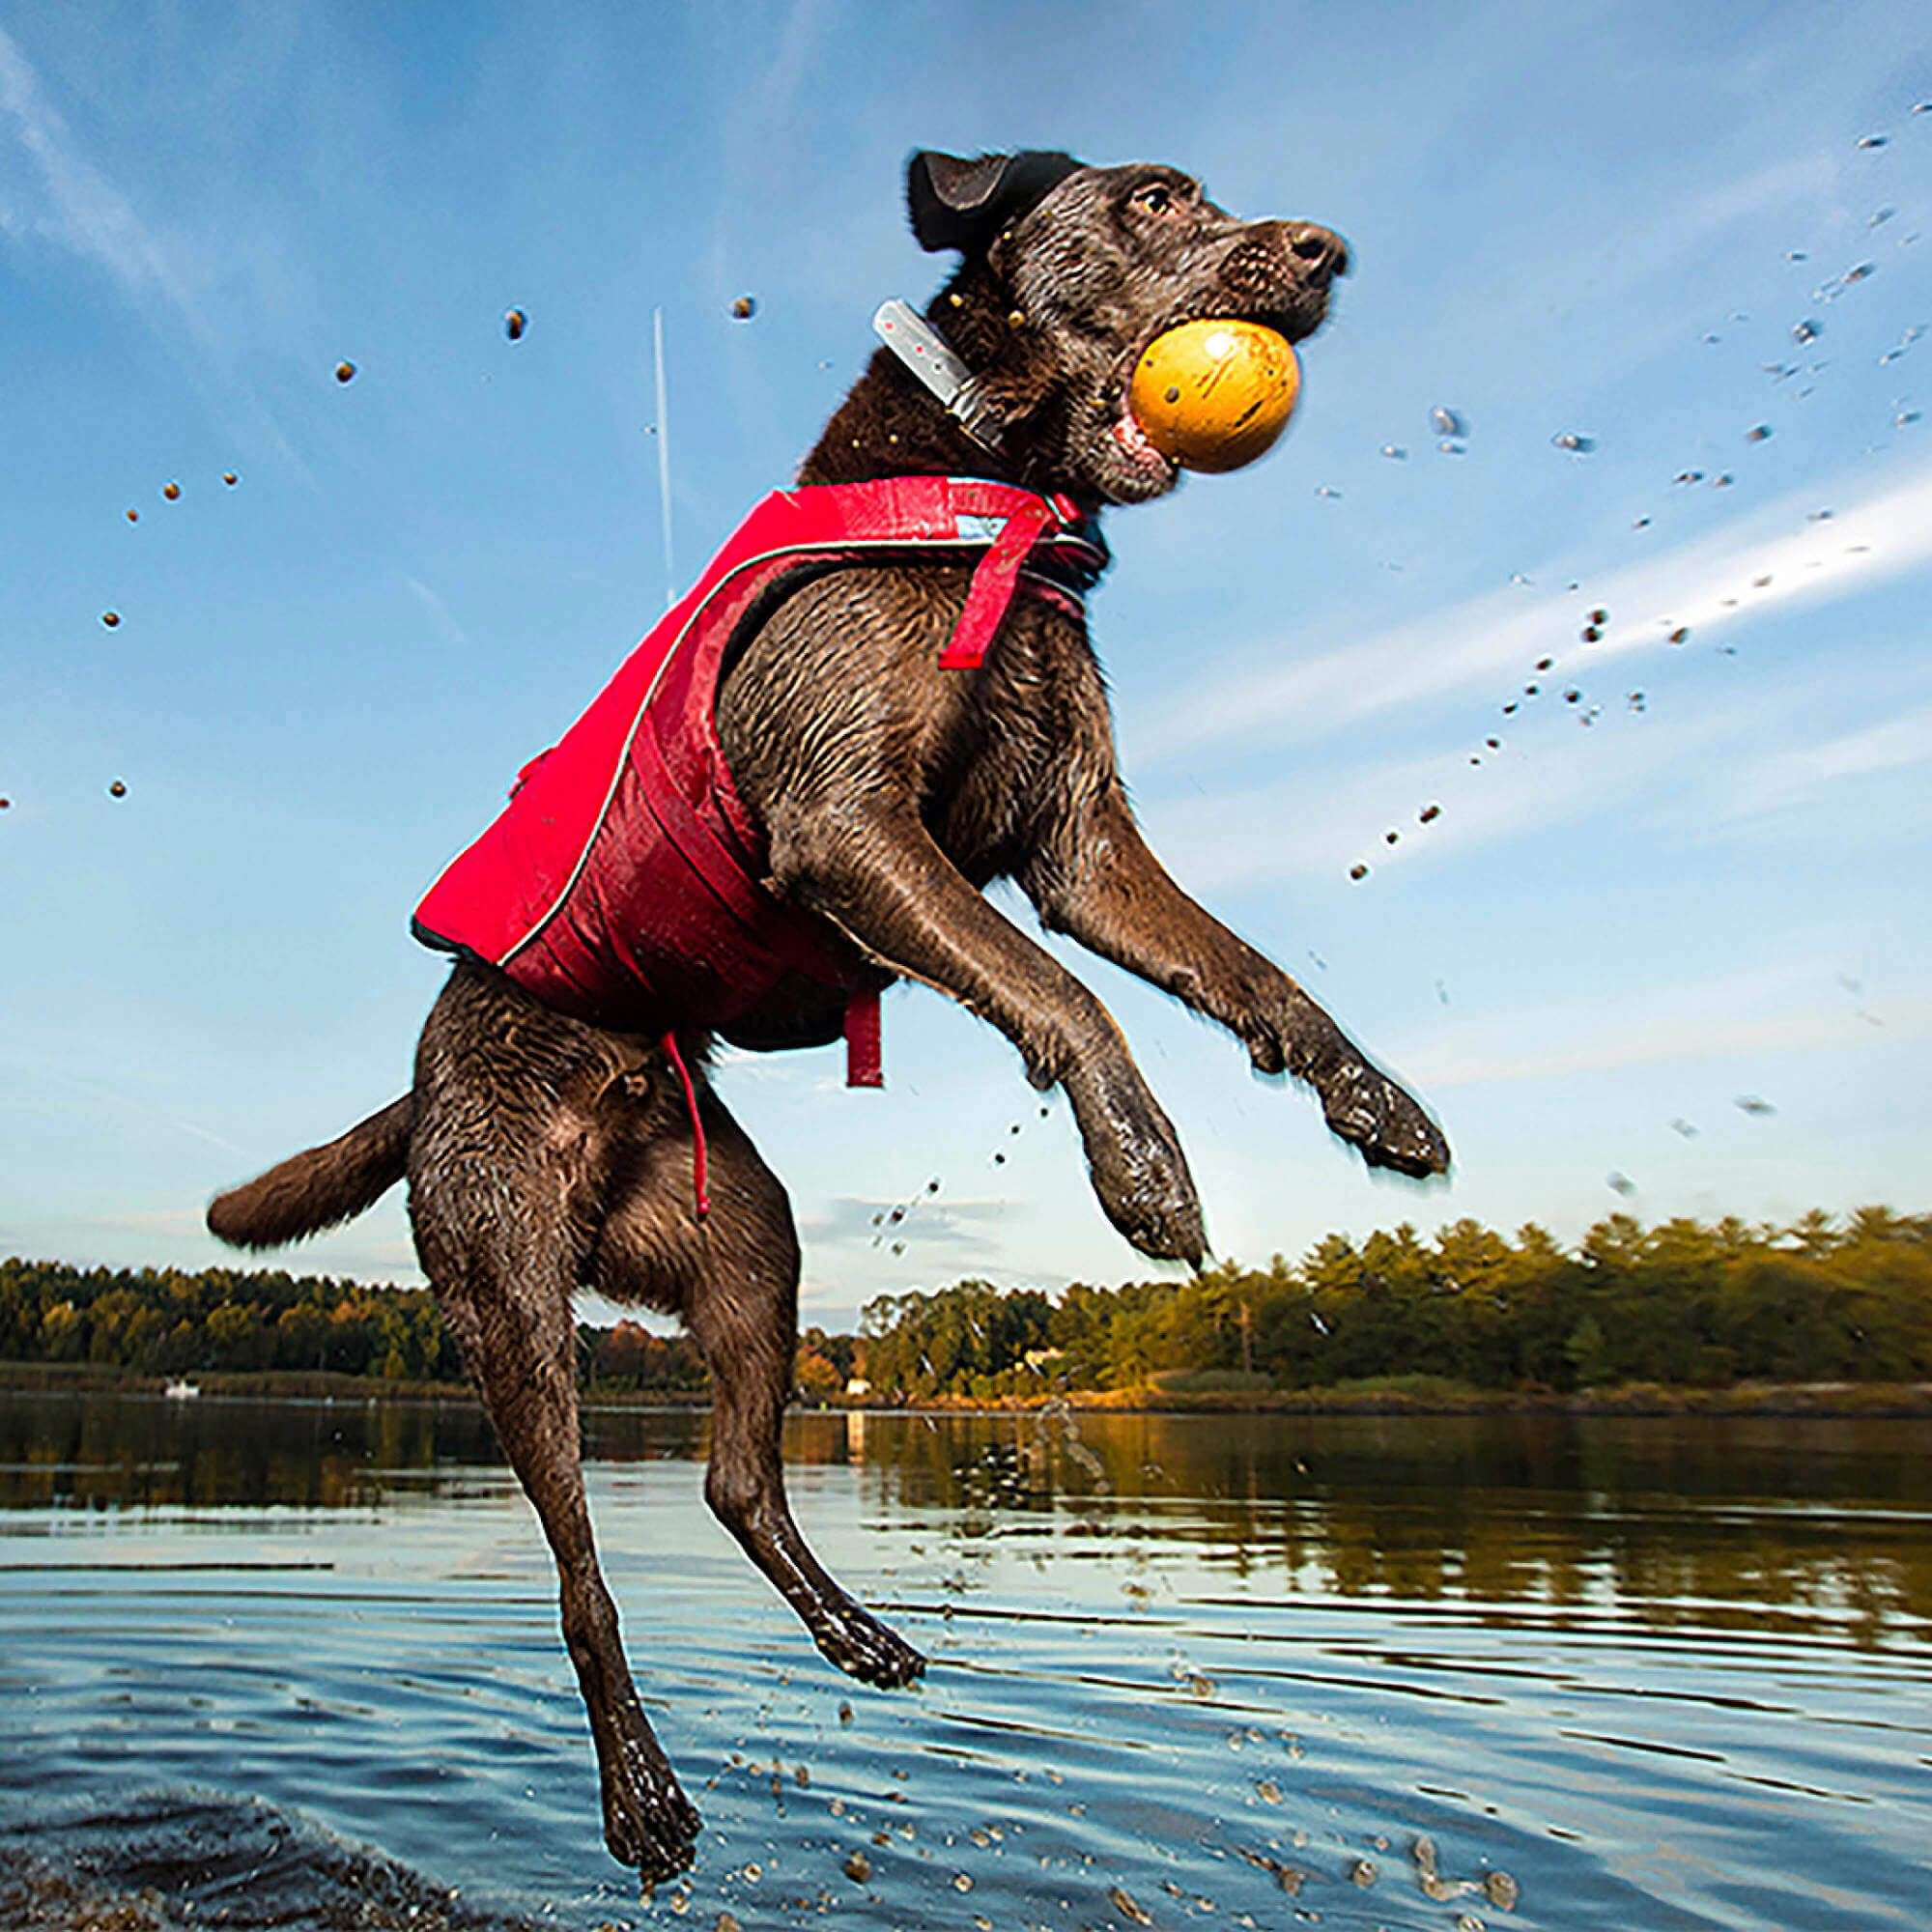 Dog catching ball outfit wearing kurgo surf n turf dog life jacket 